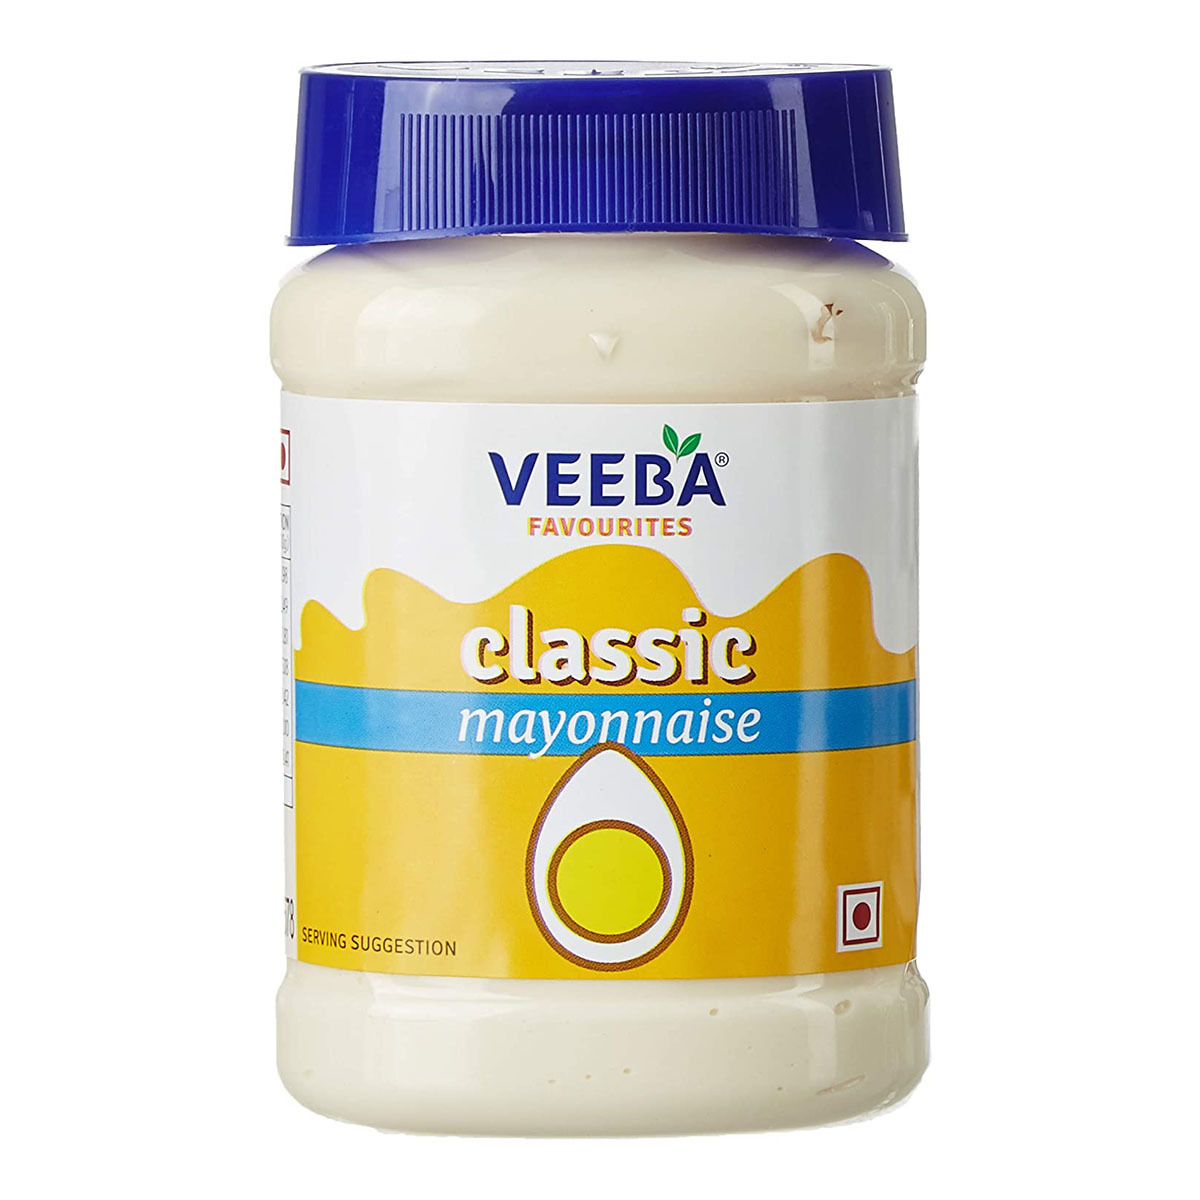 Veeba Mayonnaise Classic 275g